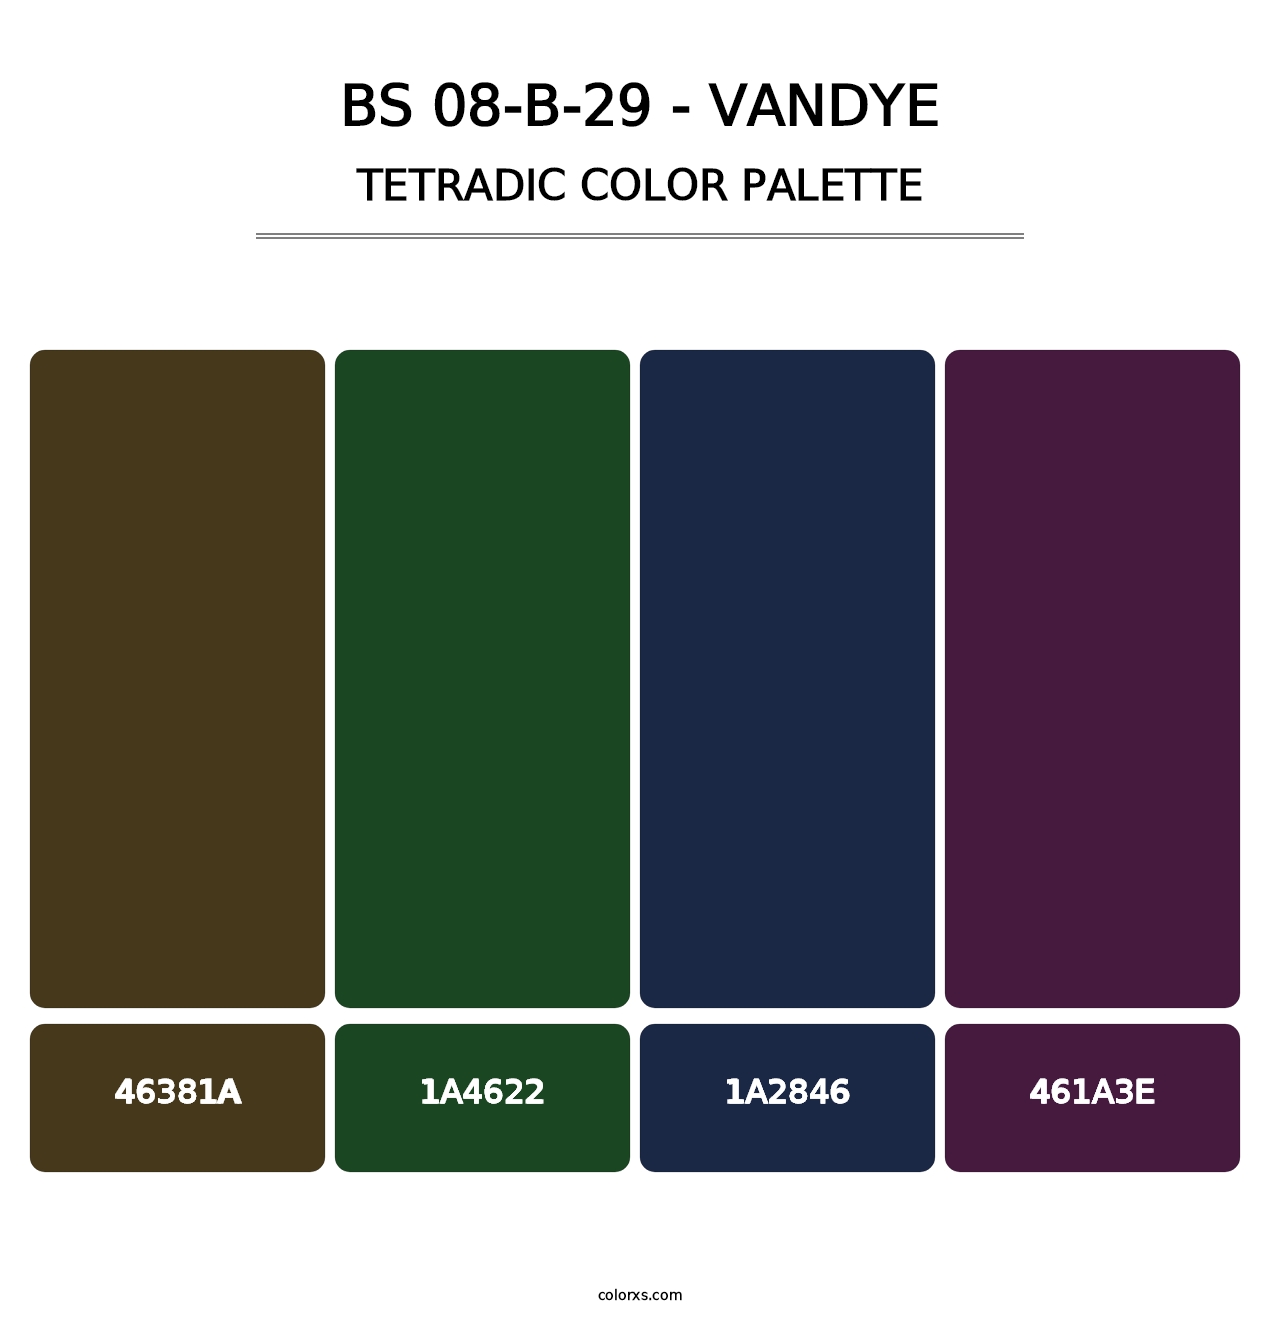 BS 08-B-29 - Vandye - Tetradic Color Palette